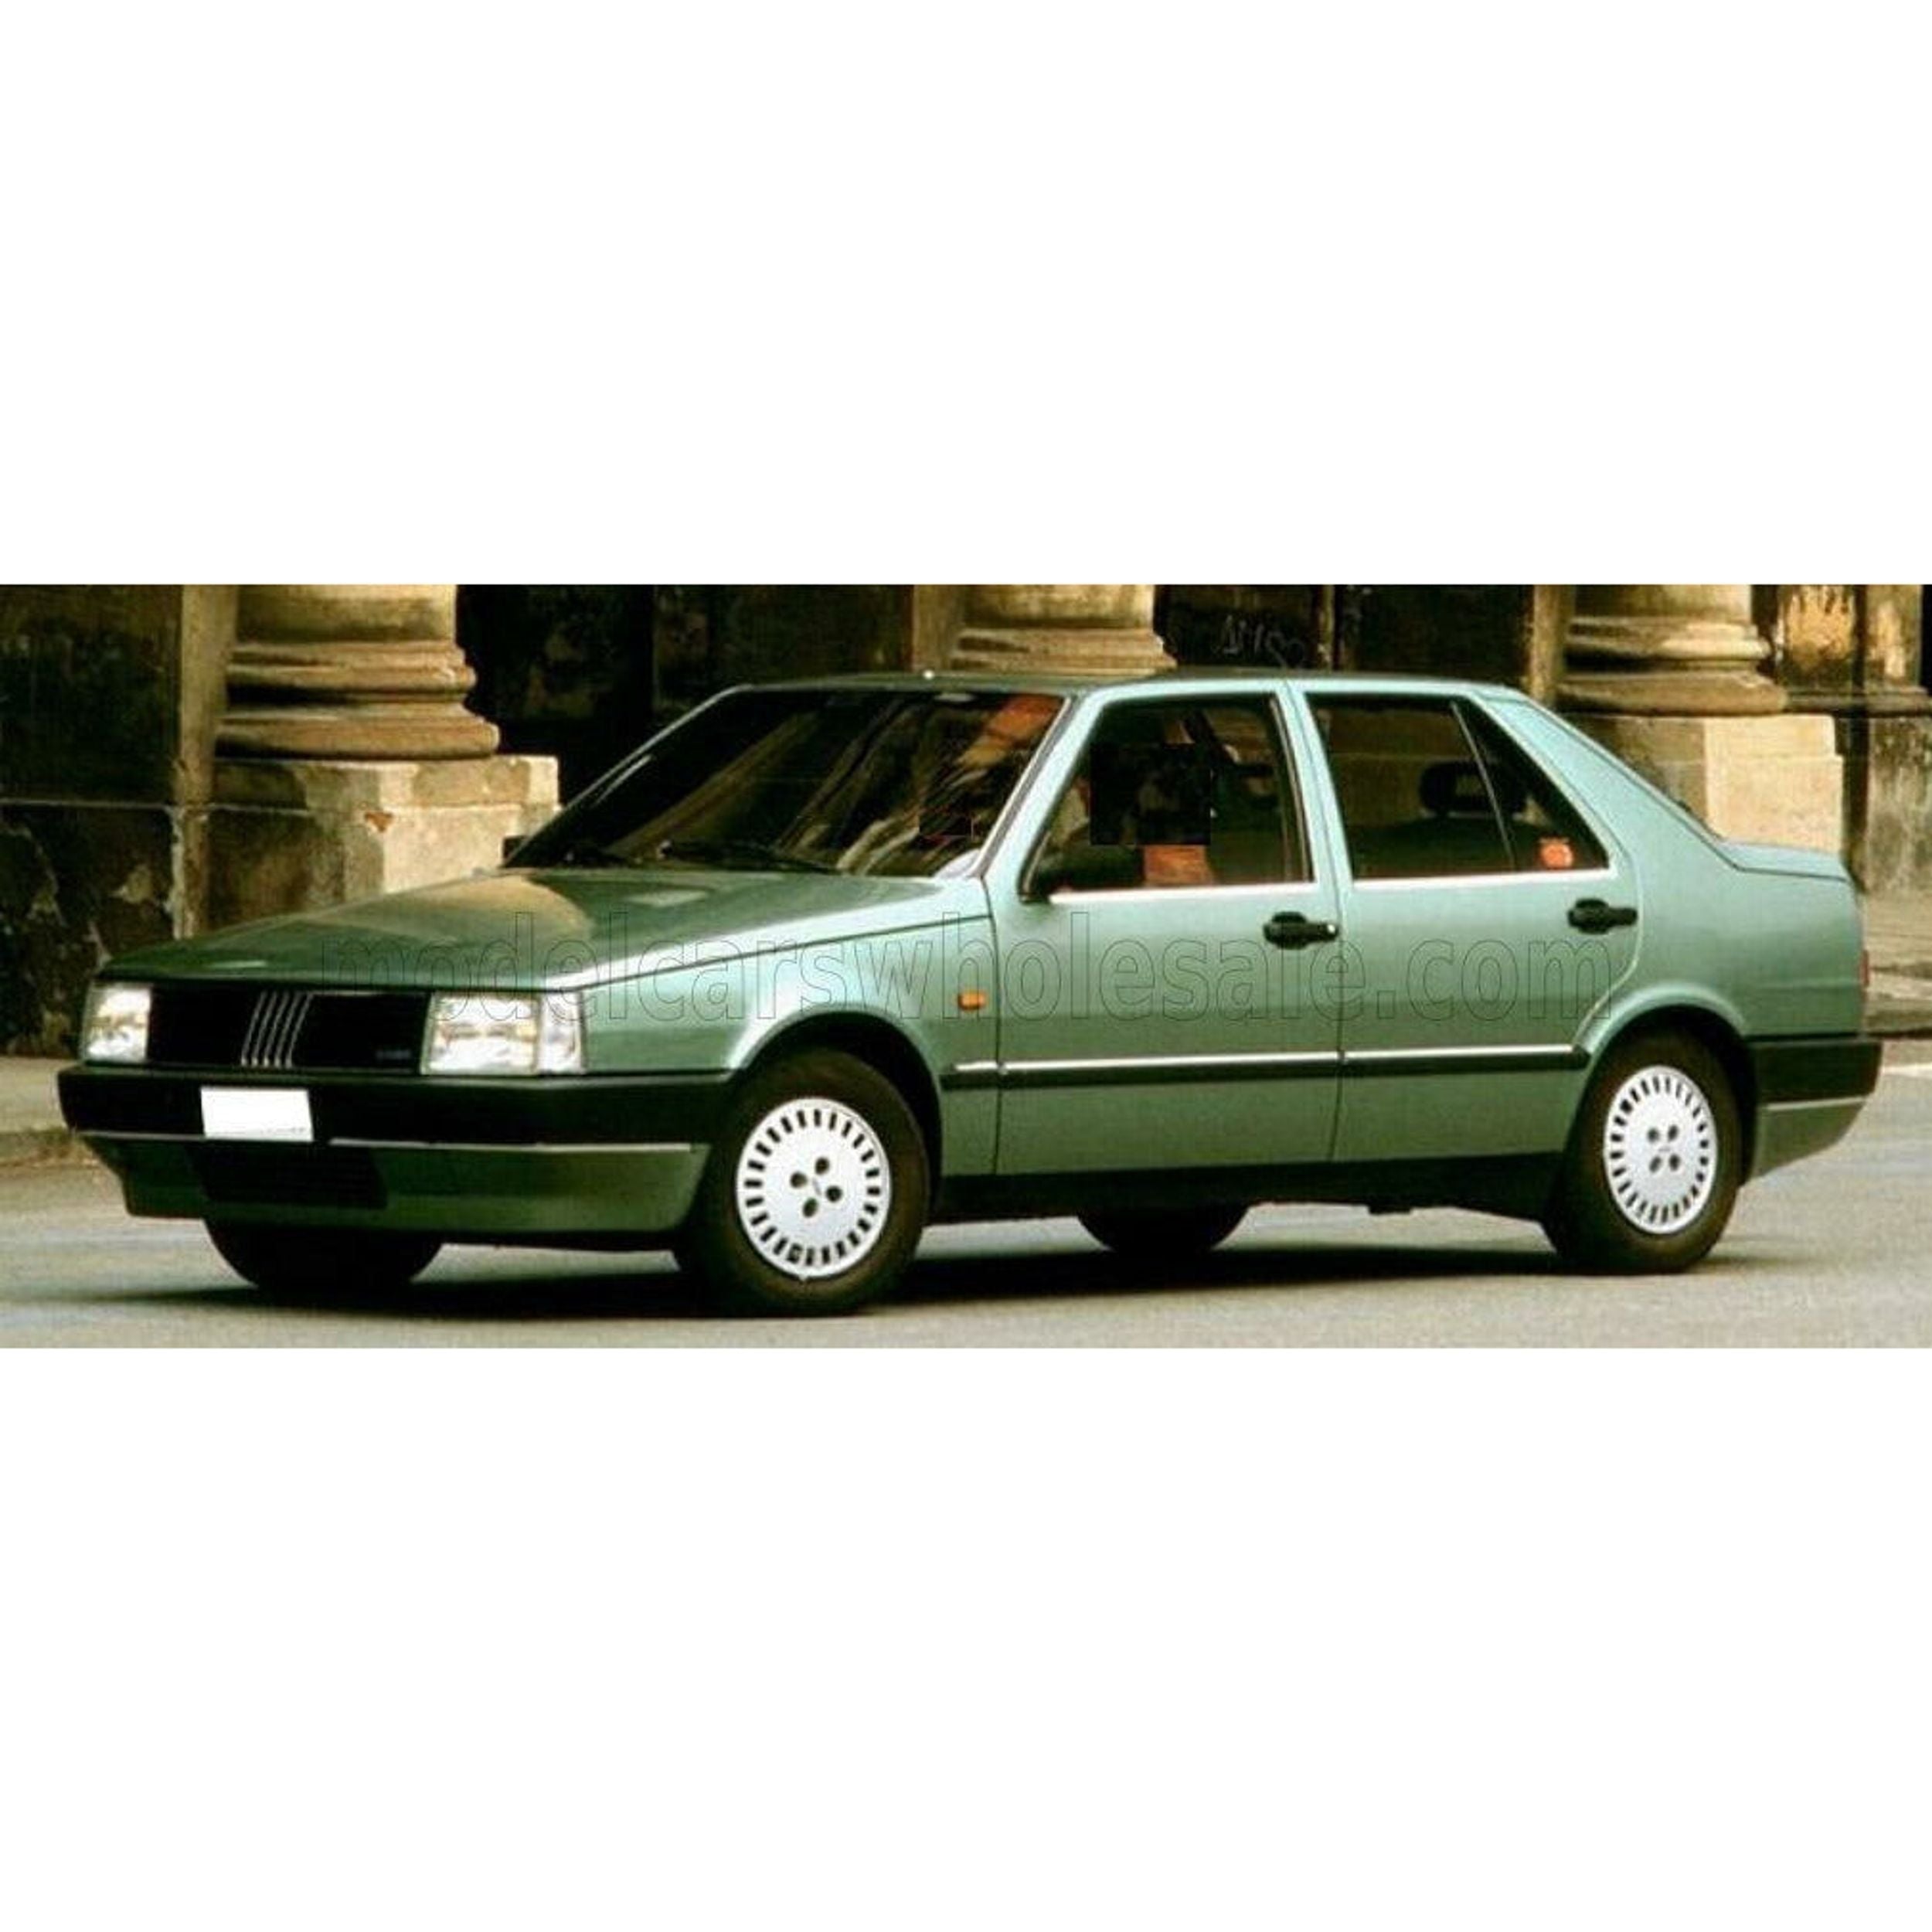 Mitica Fiat Croma 2.0 Turbo IE 1988 Green Met Ceylon 359 1:18